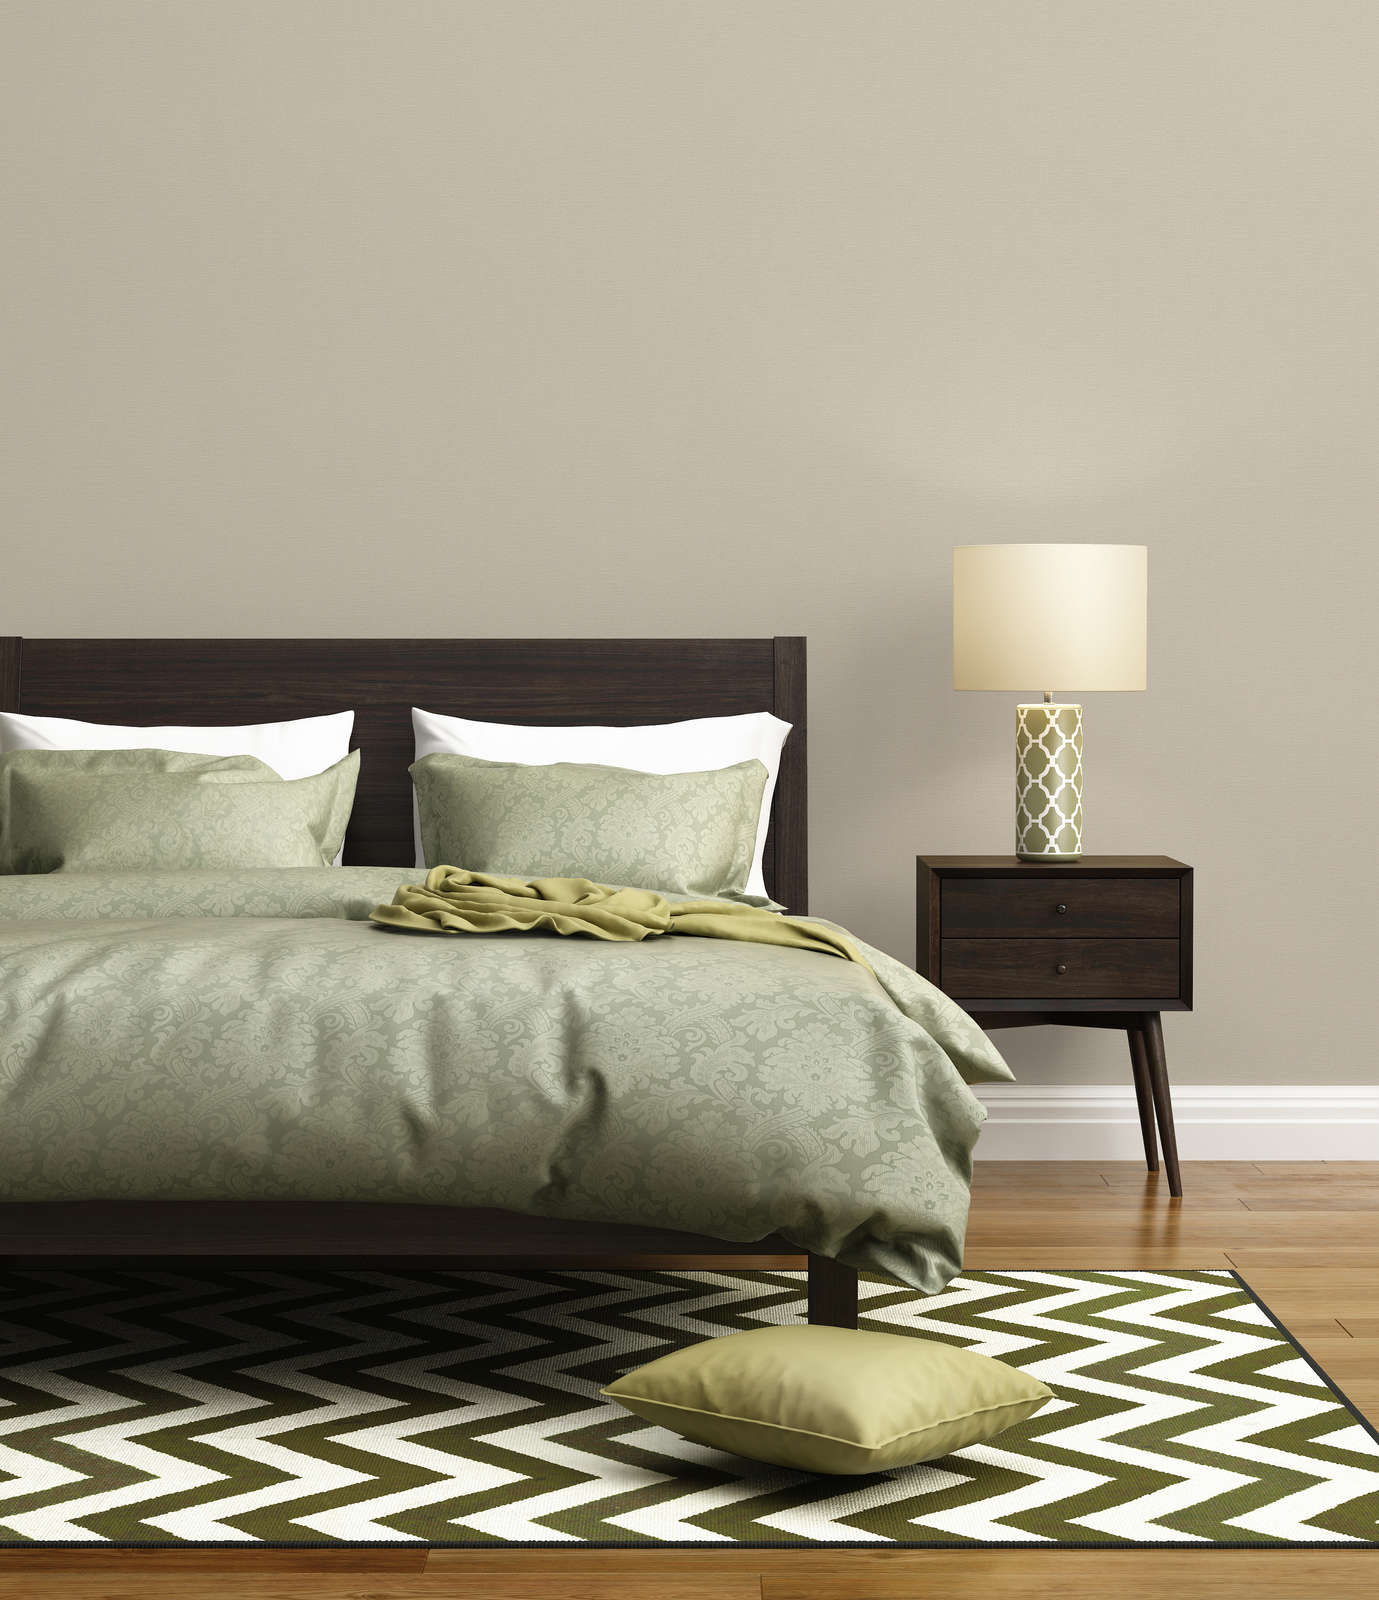             Plain wallpaper with fine structure PVC-free non-woven - Beige, Grey
        